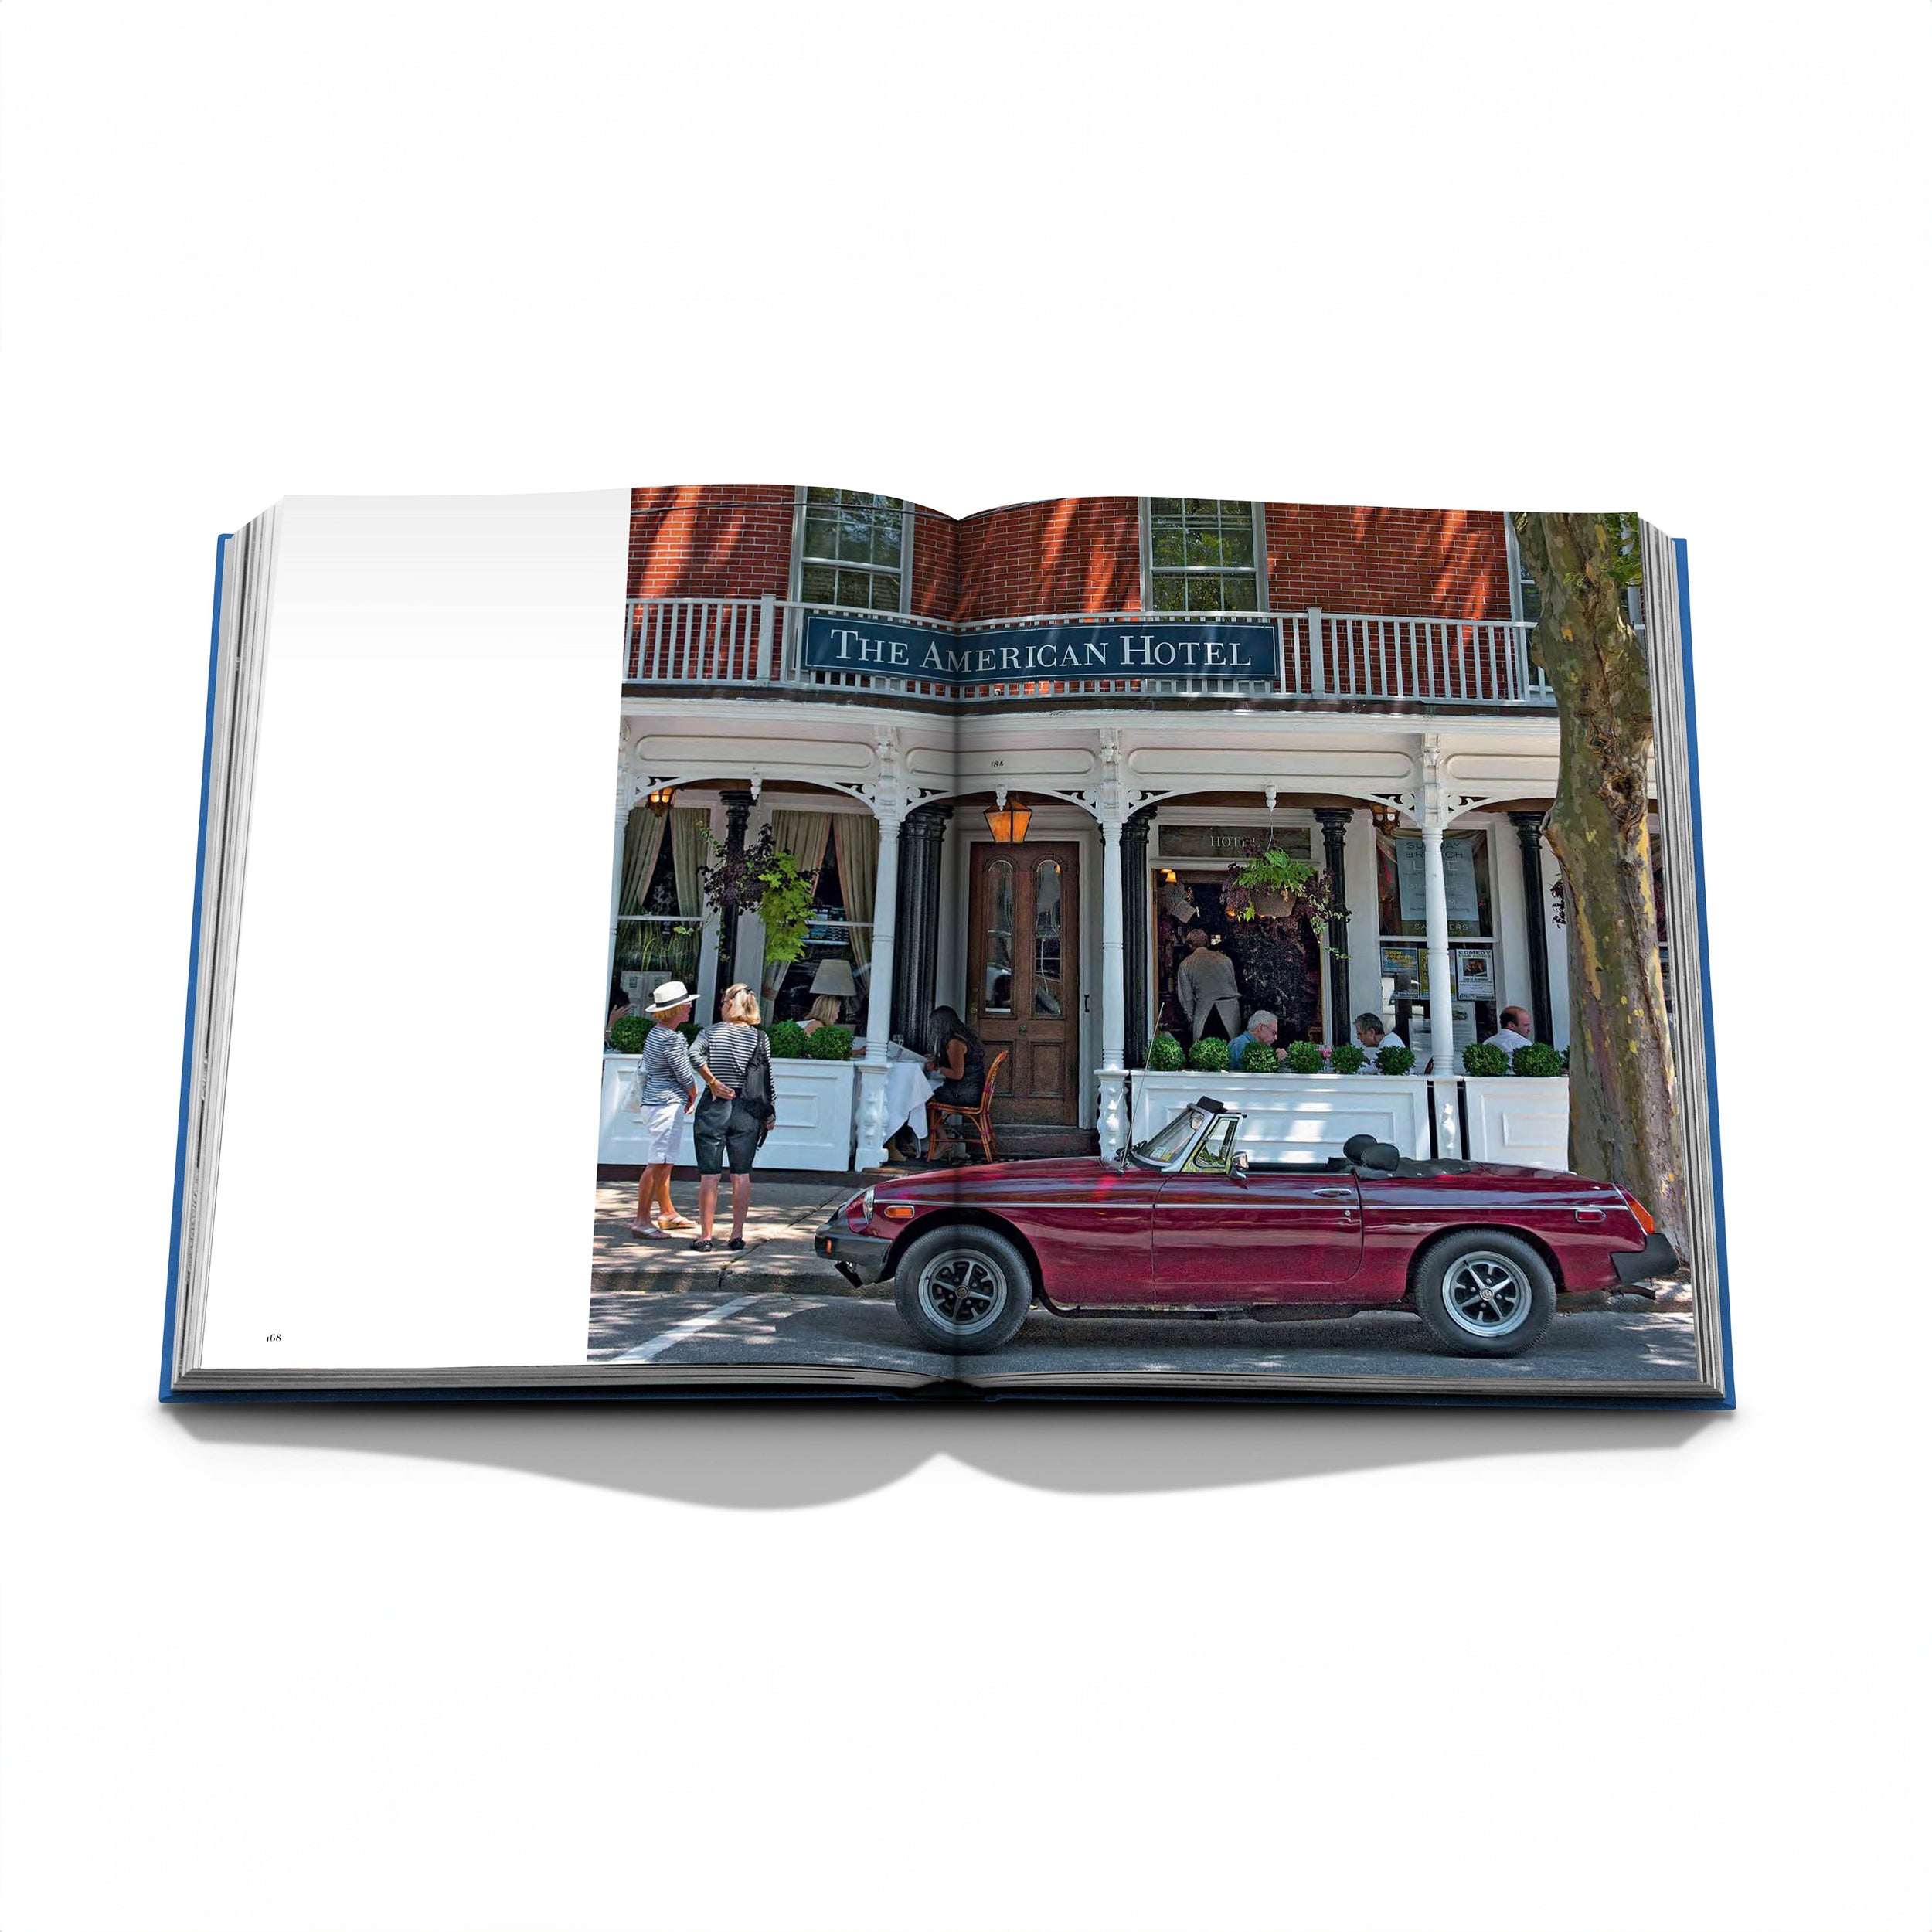 Herring & Bones - Concept Store Joyeux - Assouline - Livres - Livre Hamptons Private